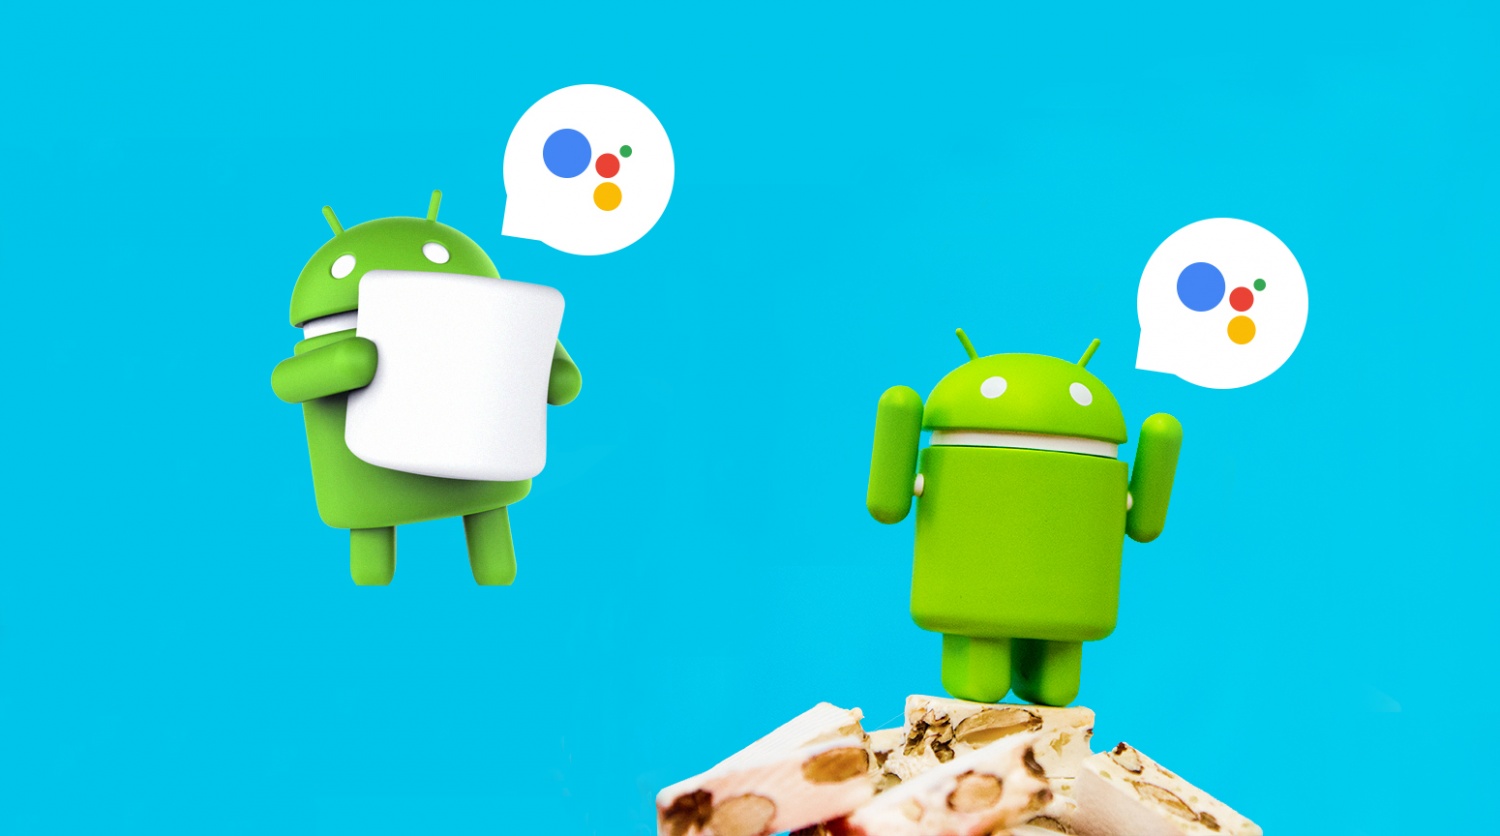 Google announces Android Auto updates at CES 2024